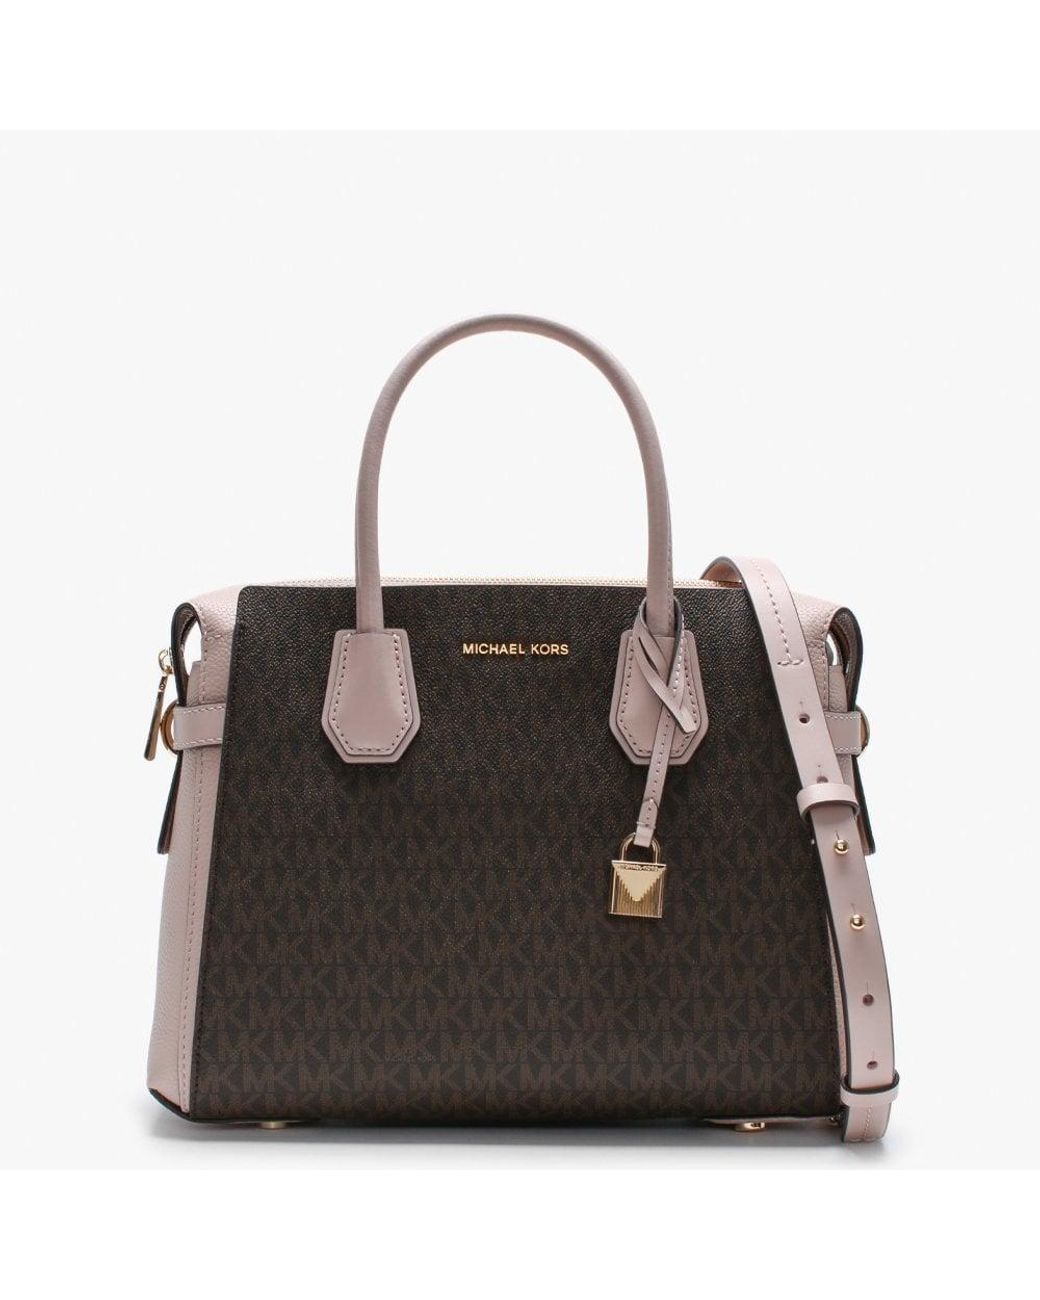 Pink Michael Kors Handbag | Handbag essentials, Girly bags, Purses